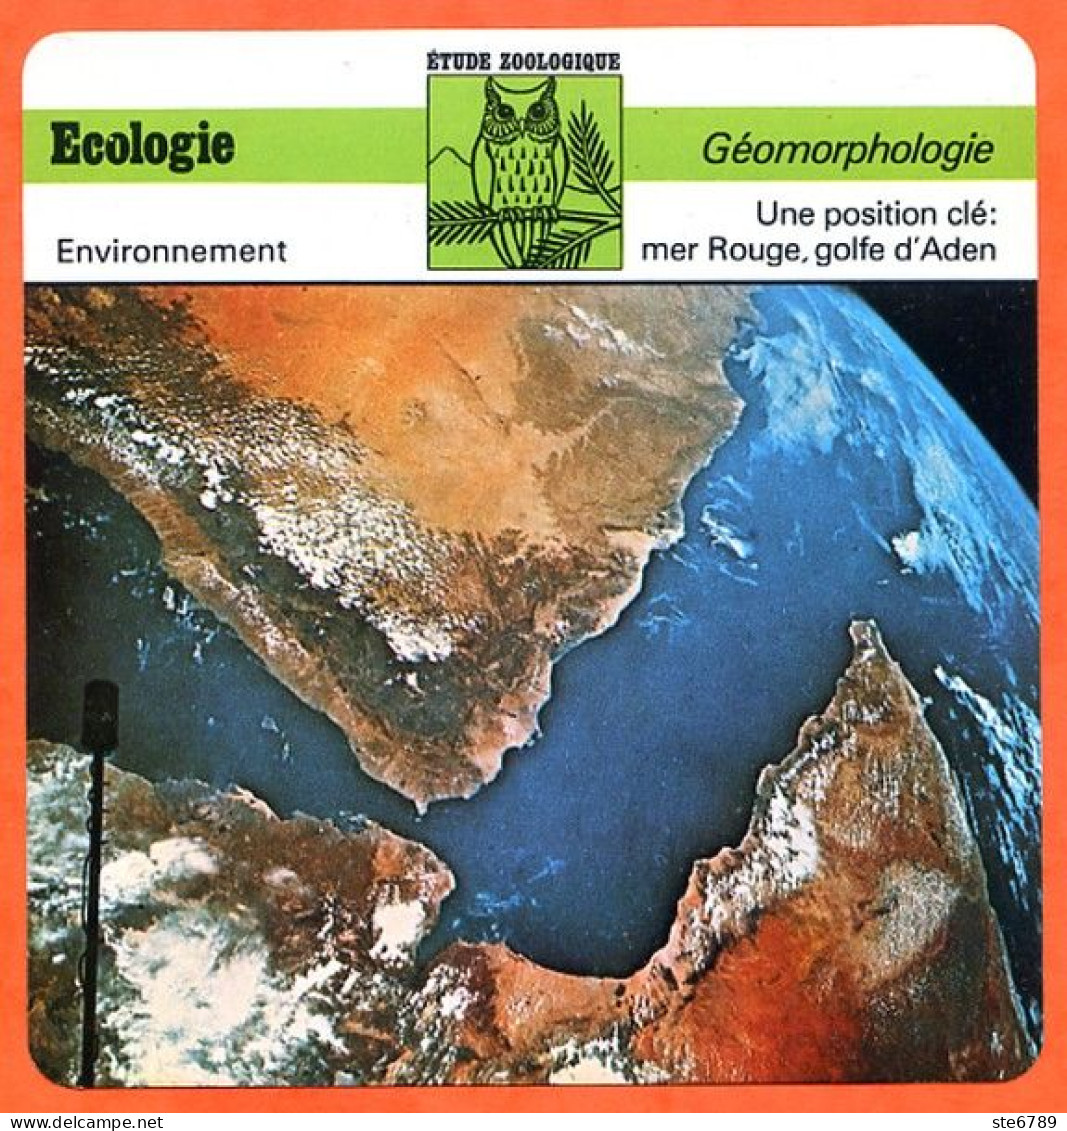 Fiche Ecologie Mer Rouge Golfe D'Aden  Illustration Mer Rouge Golfe Aden  Géomorphologie Etude Zoologique - Géographie